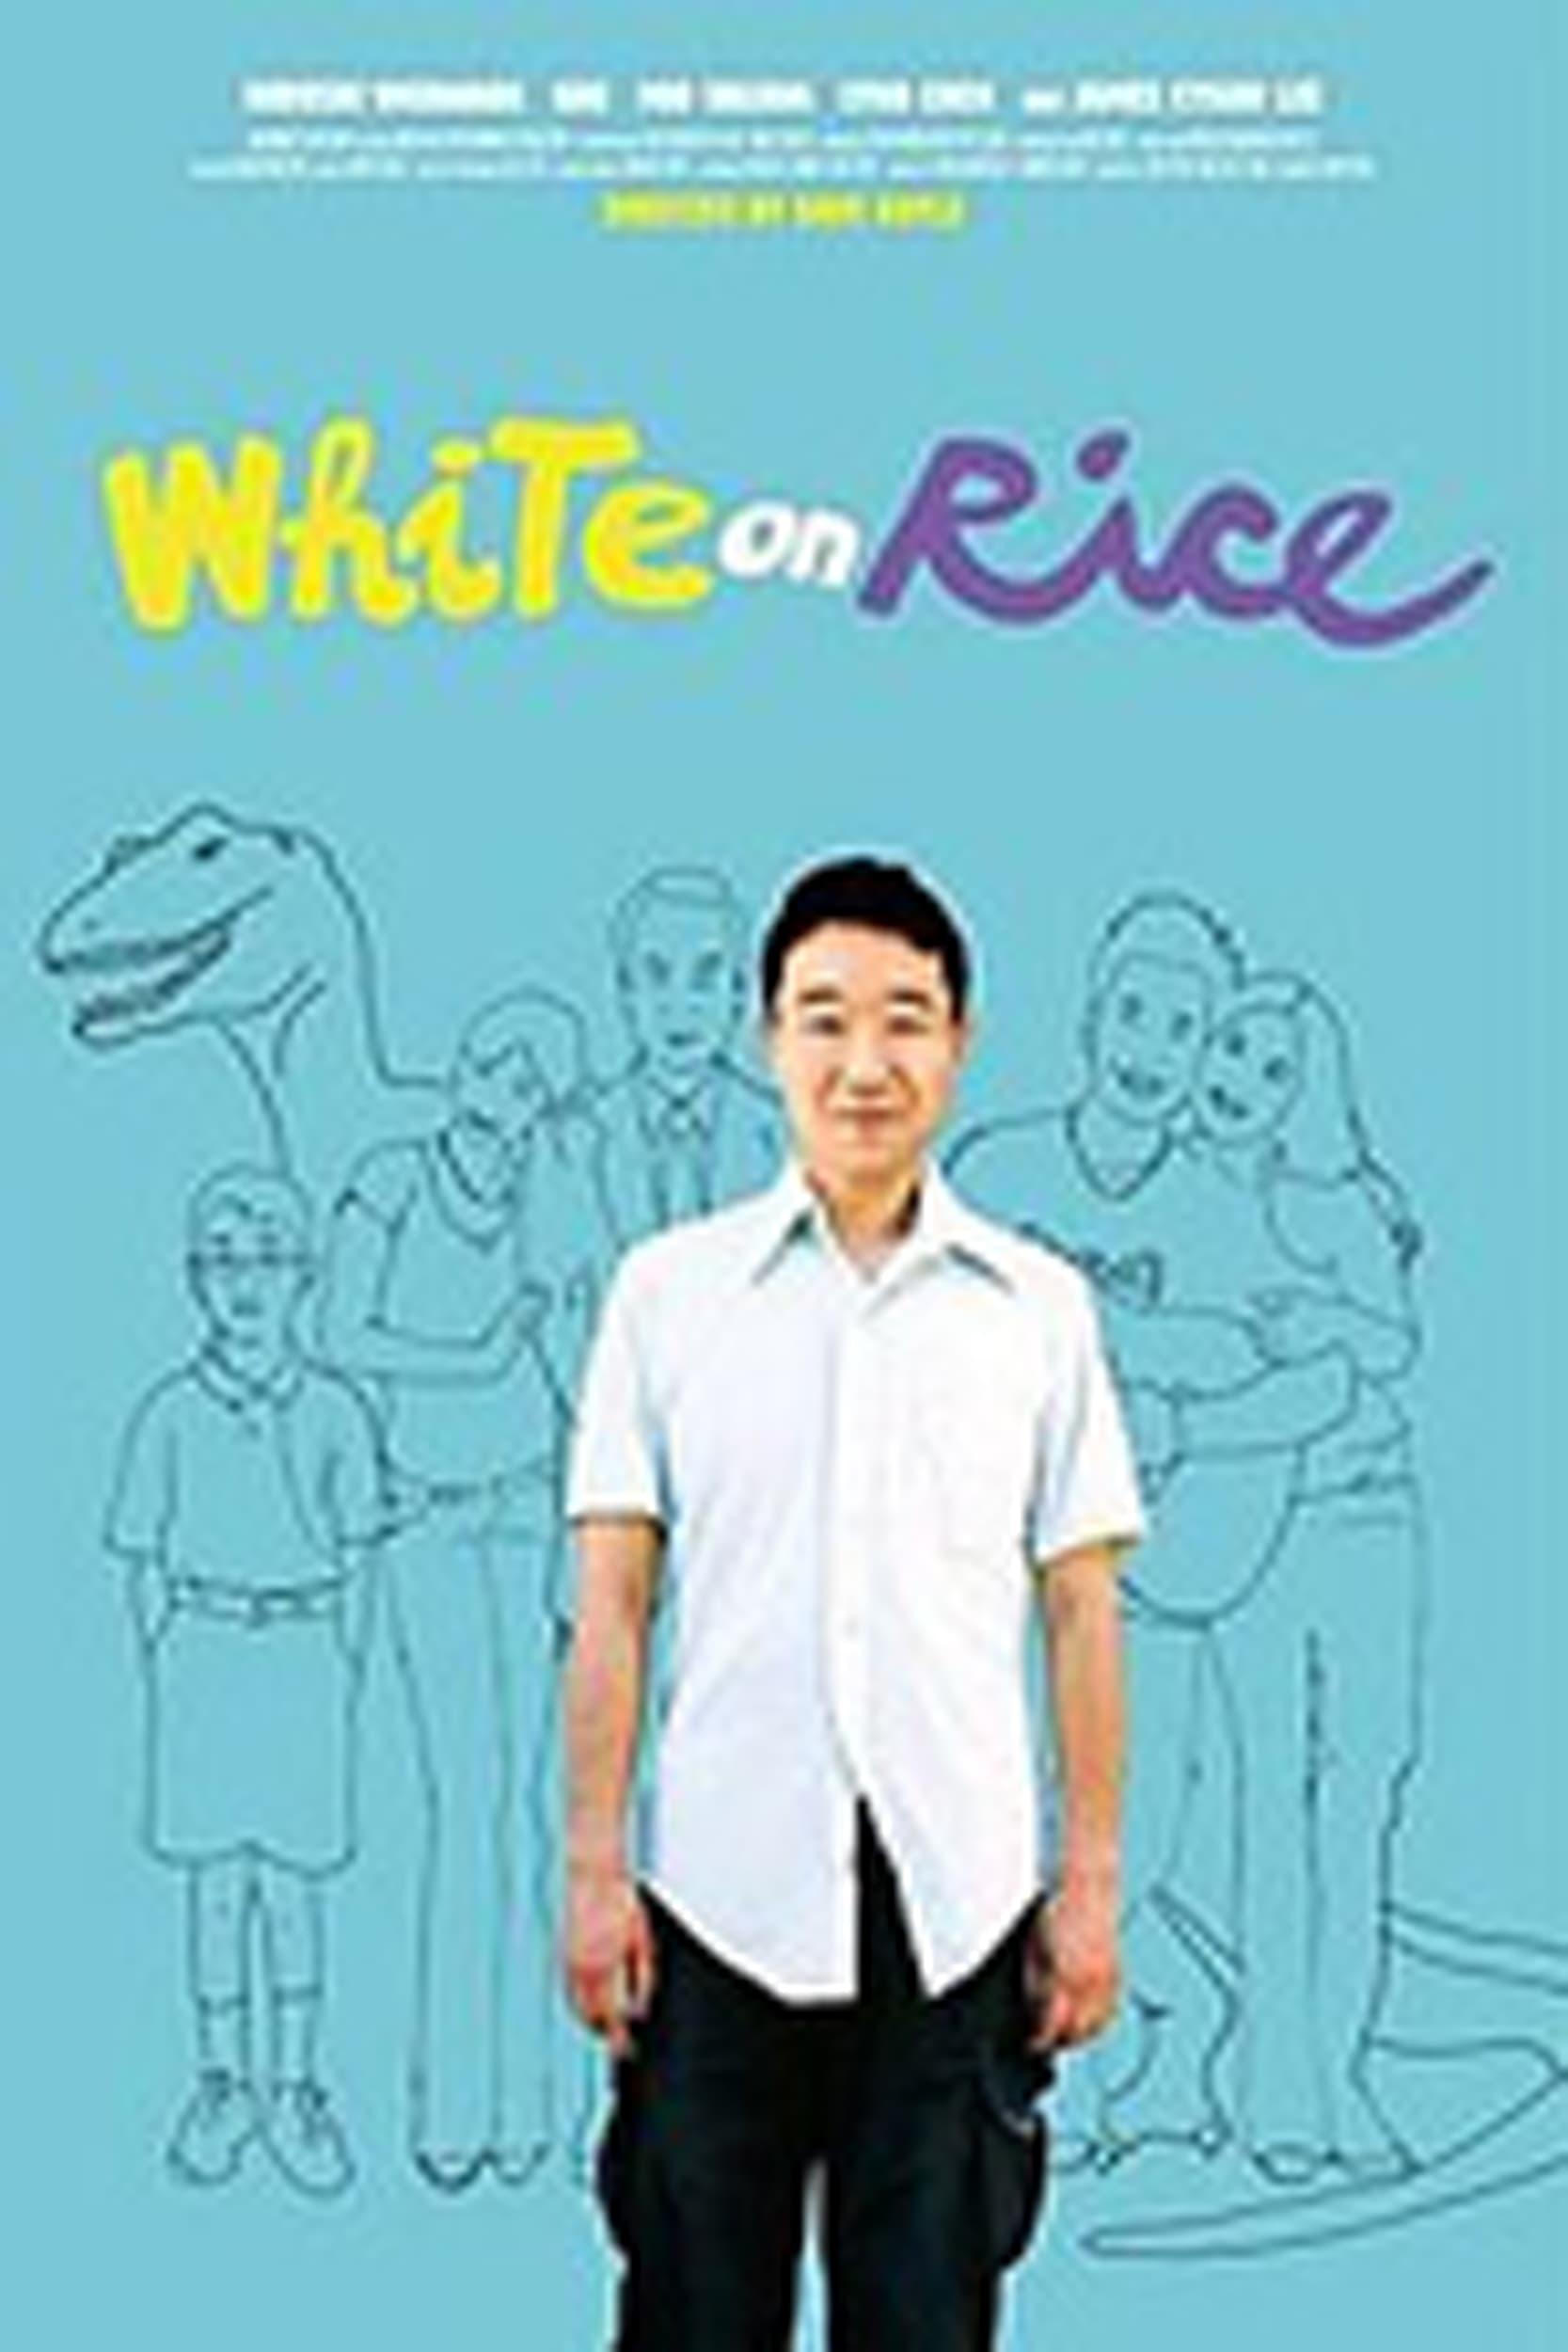 White on Rice poster